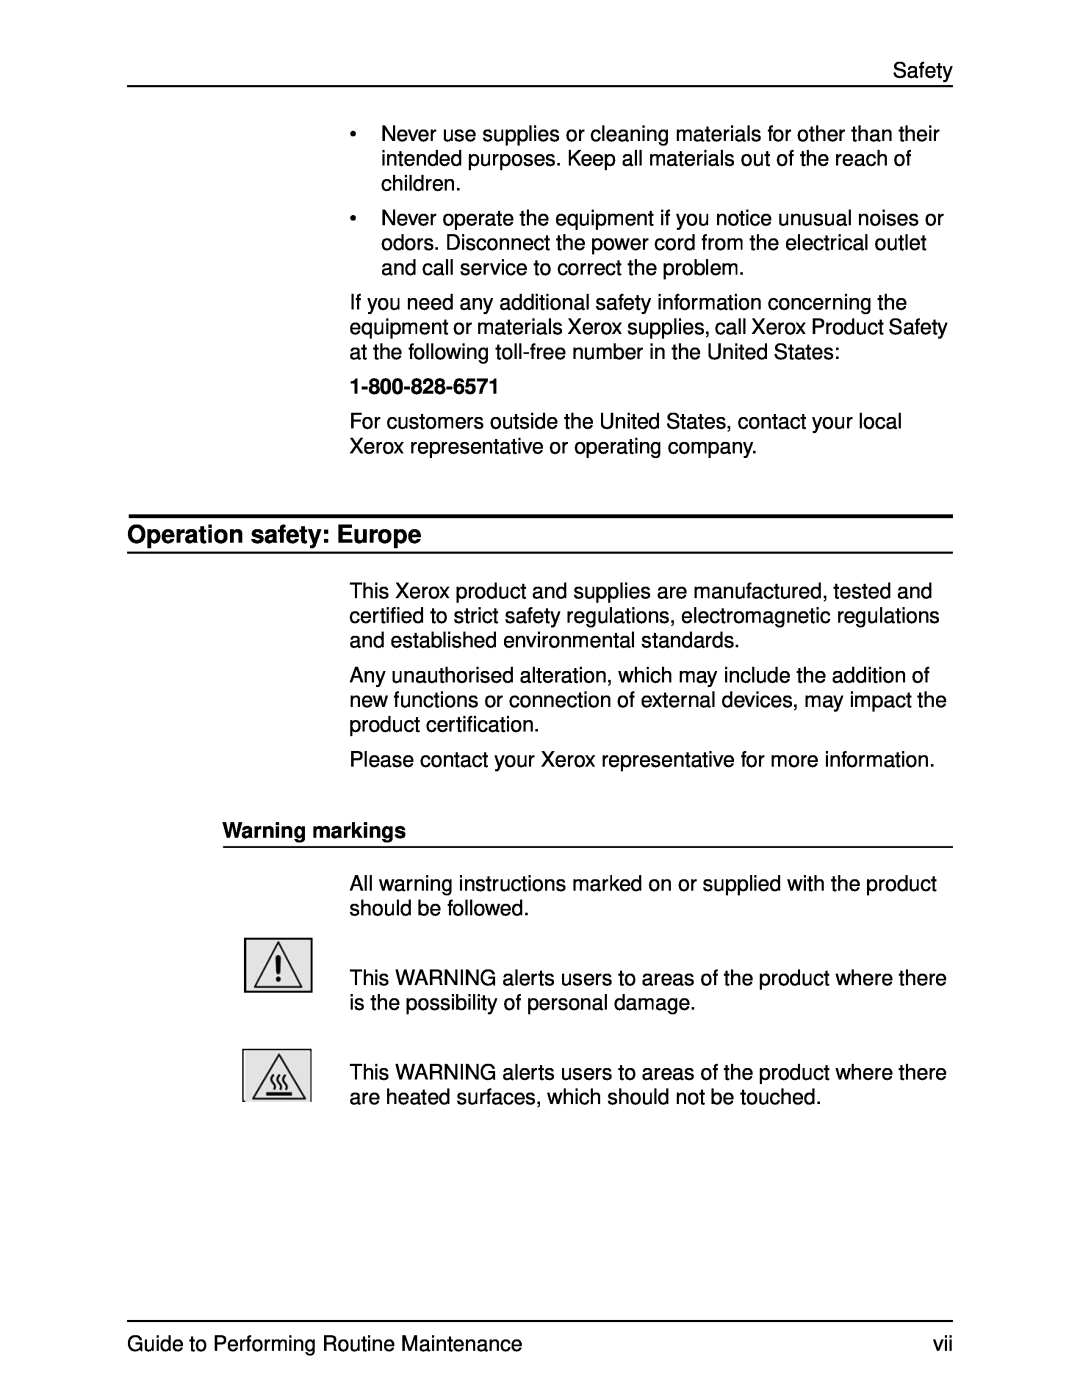 Xerox DocuPrint 96 manual Operation safety Europe, Warning markings 